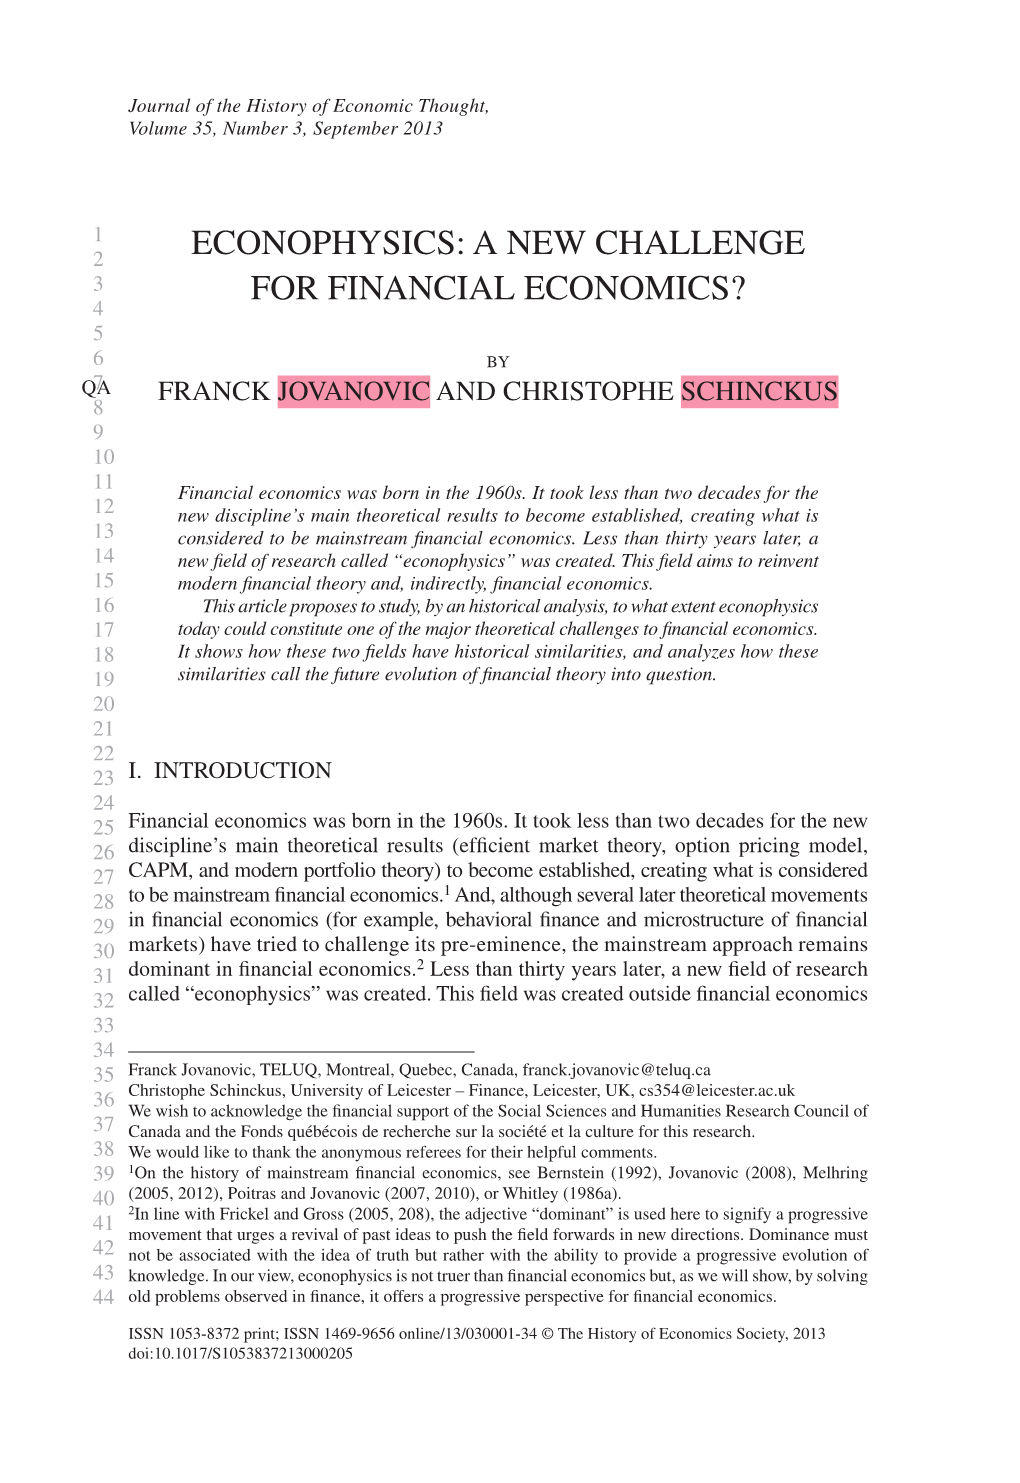 Econophysics: a New Challenge for Financial Economics?